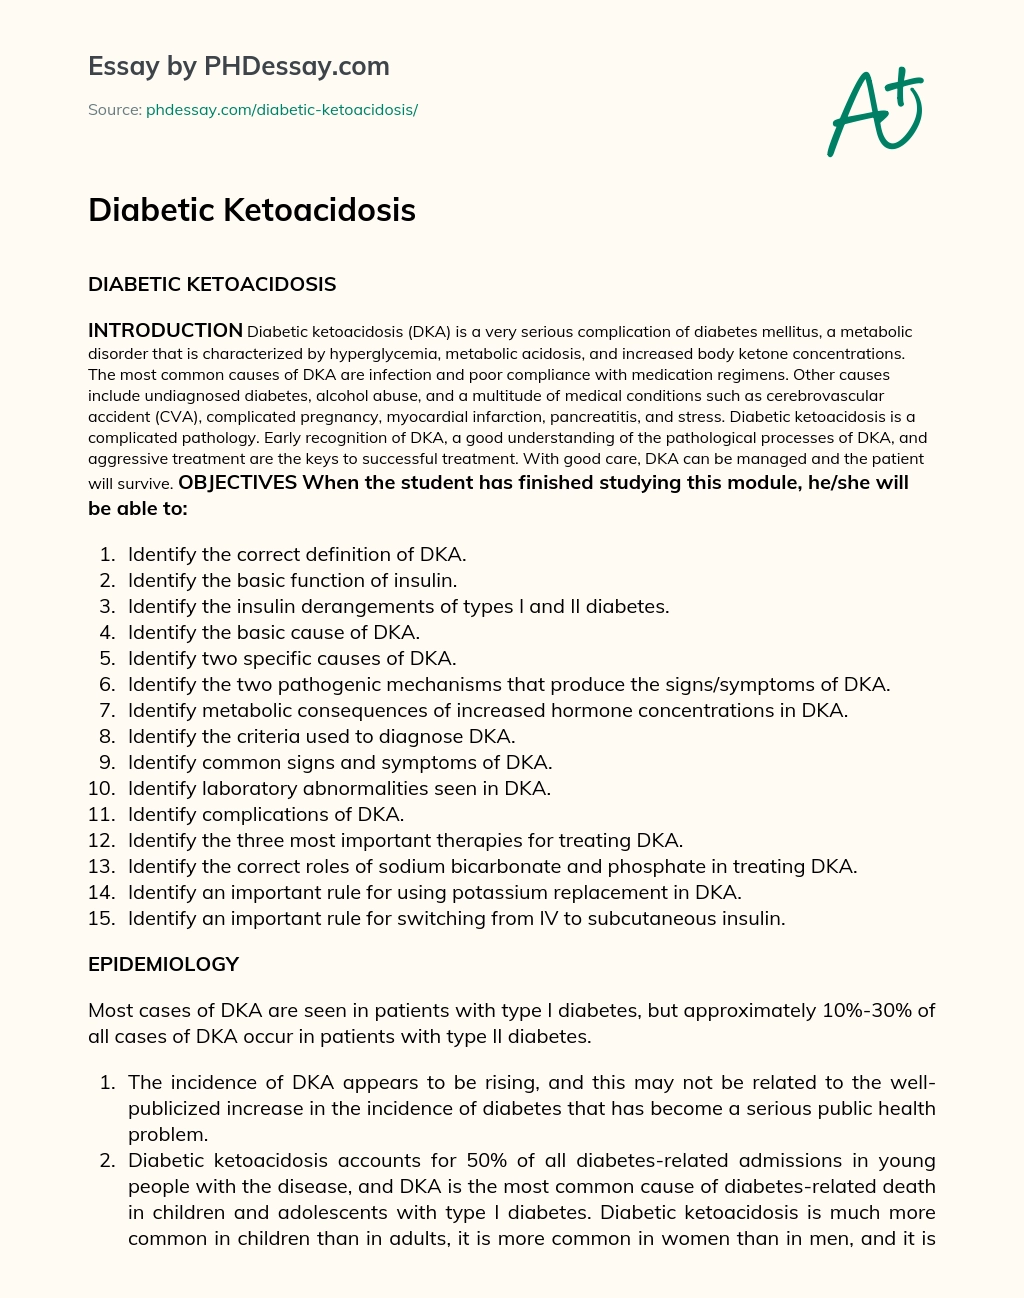 Diabetic Ketoacidosis essay